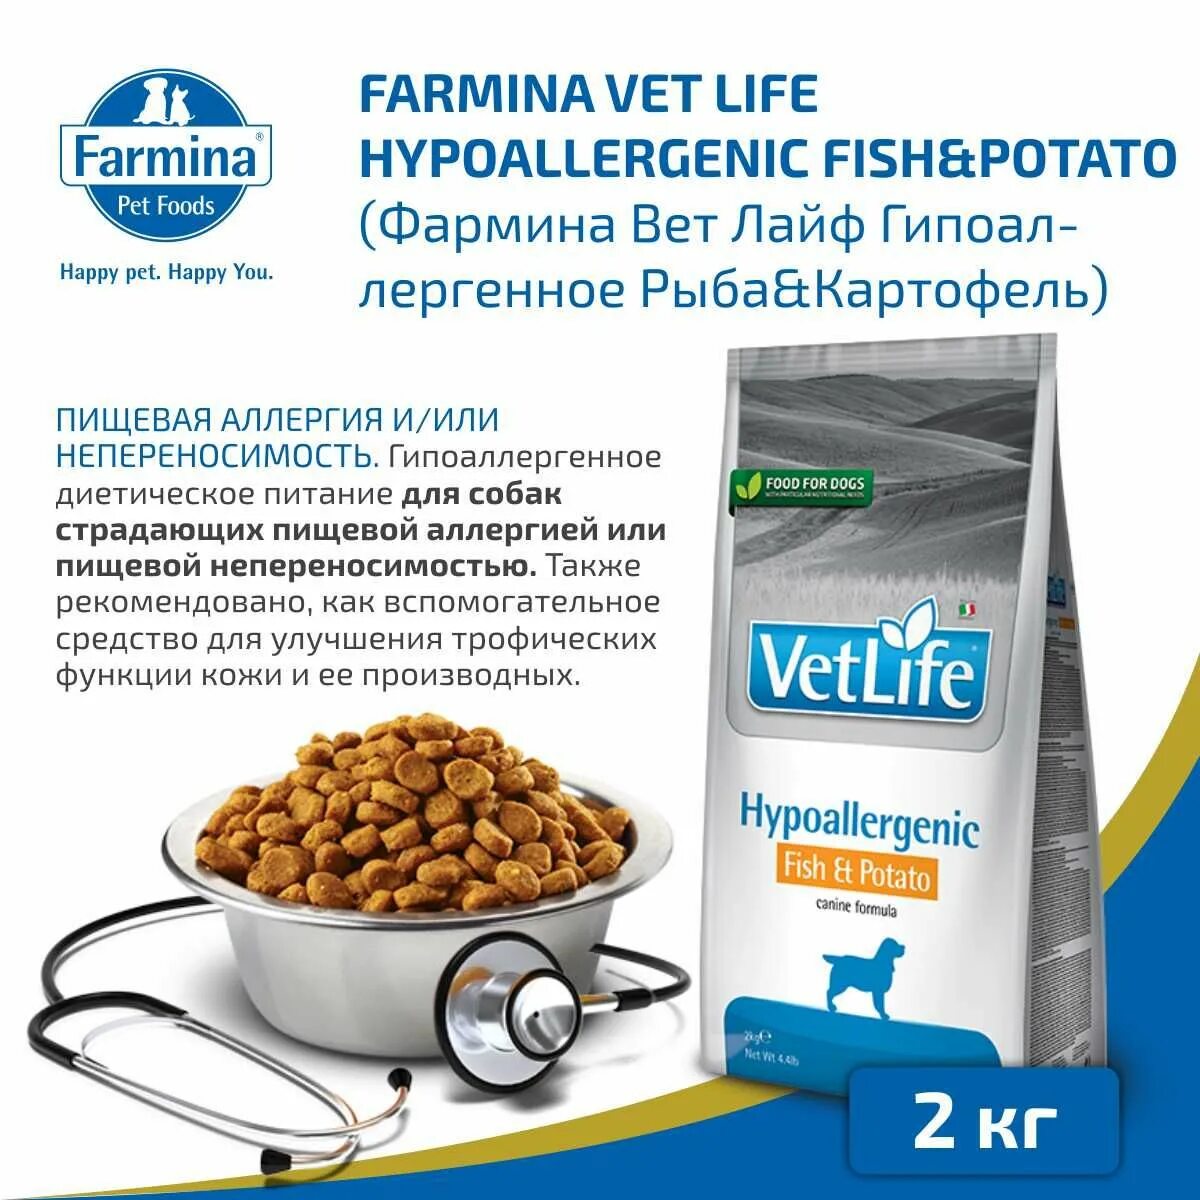 Farmina Fish Potato vet Life Dog Hypoallergenic. Farmina vet Life Dog Hypoallergenic. Farmina vet Life Hypoallergenic.